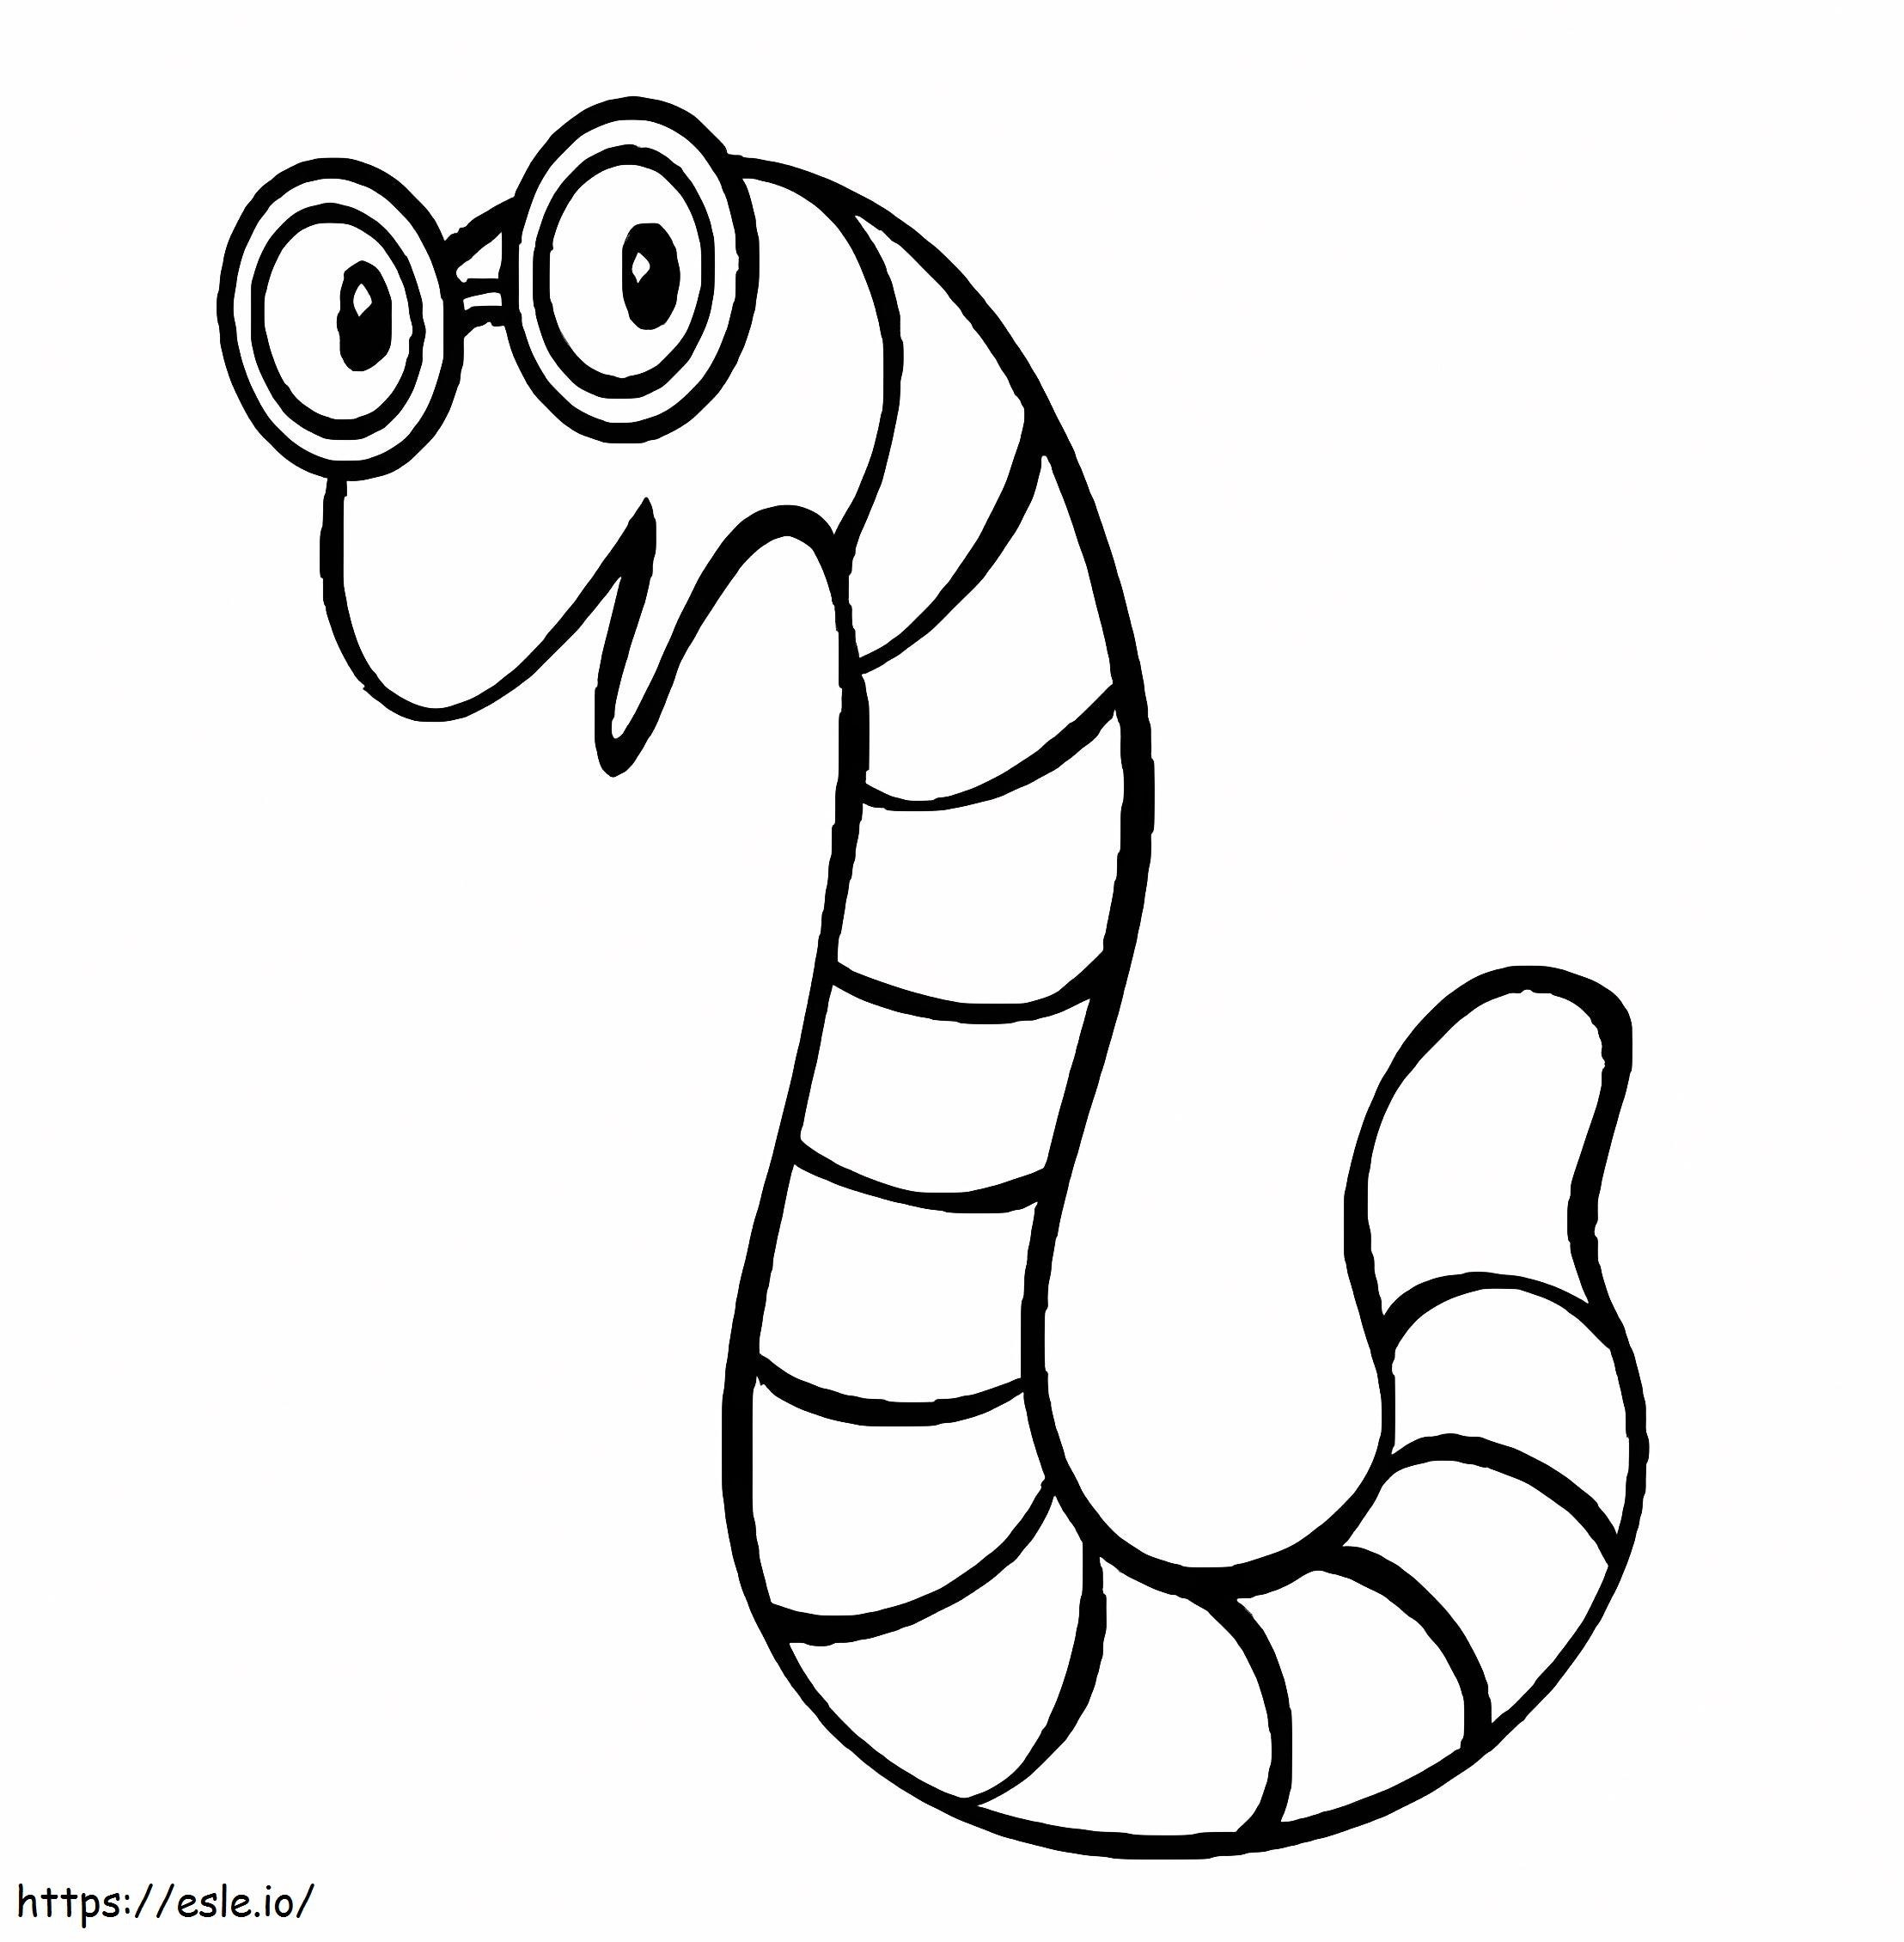 Normale Würmer ausmalbilder